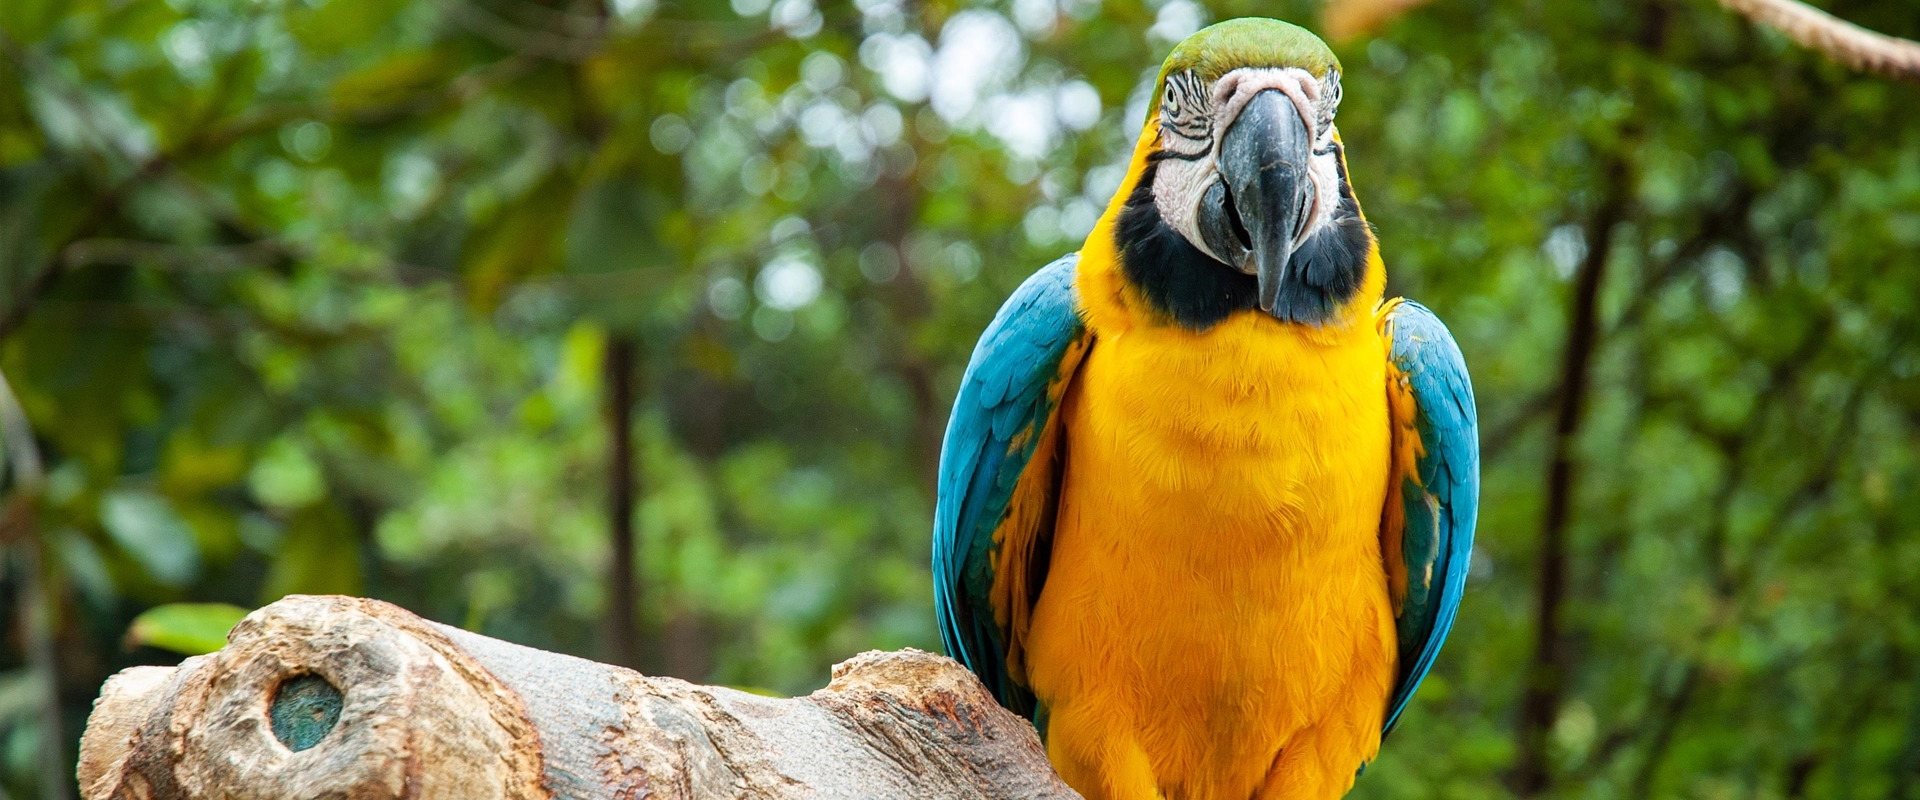 voyage organise equateur perroquet amazonie